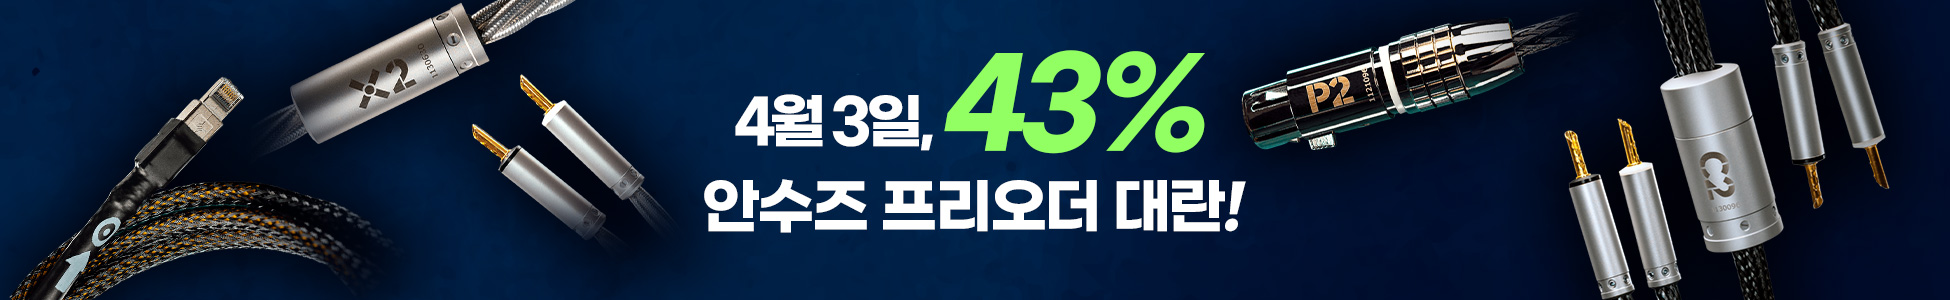 4 3, 43% ȼ  !!